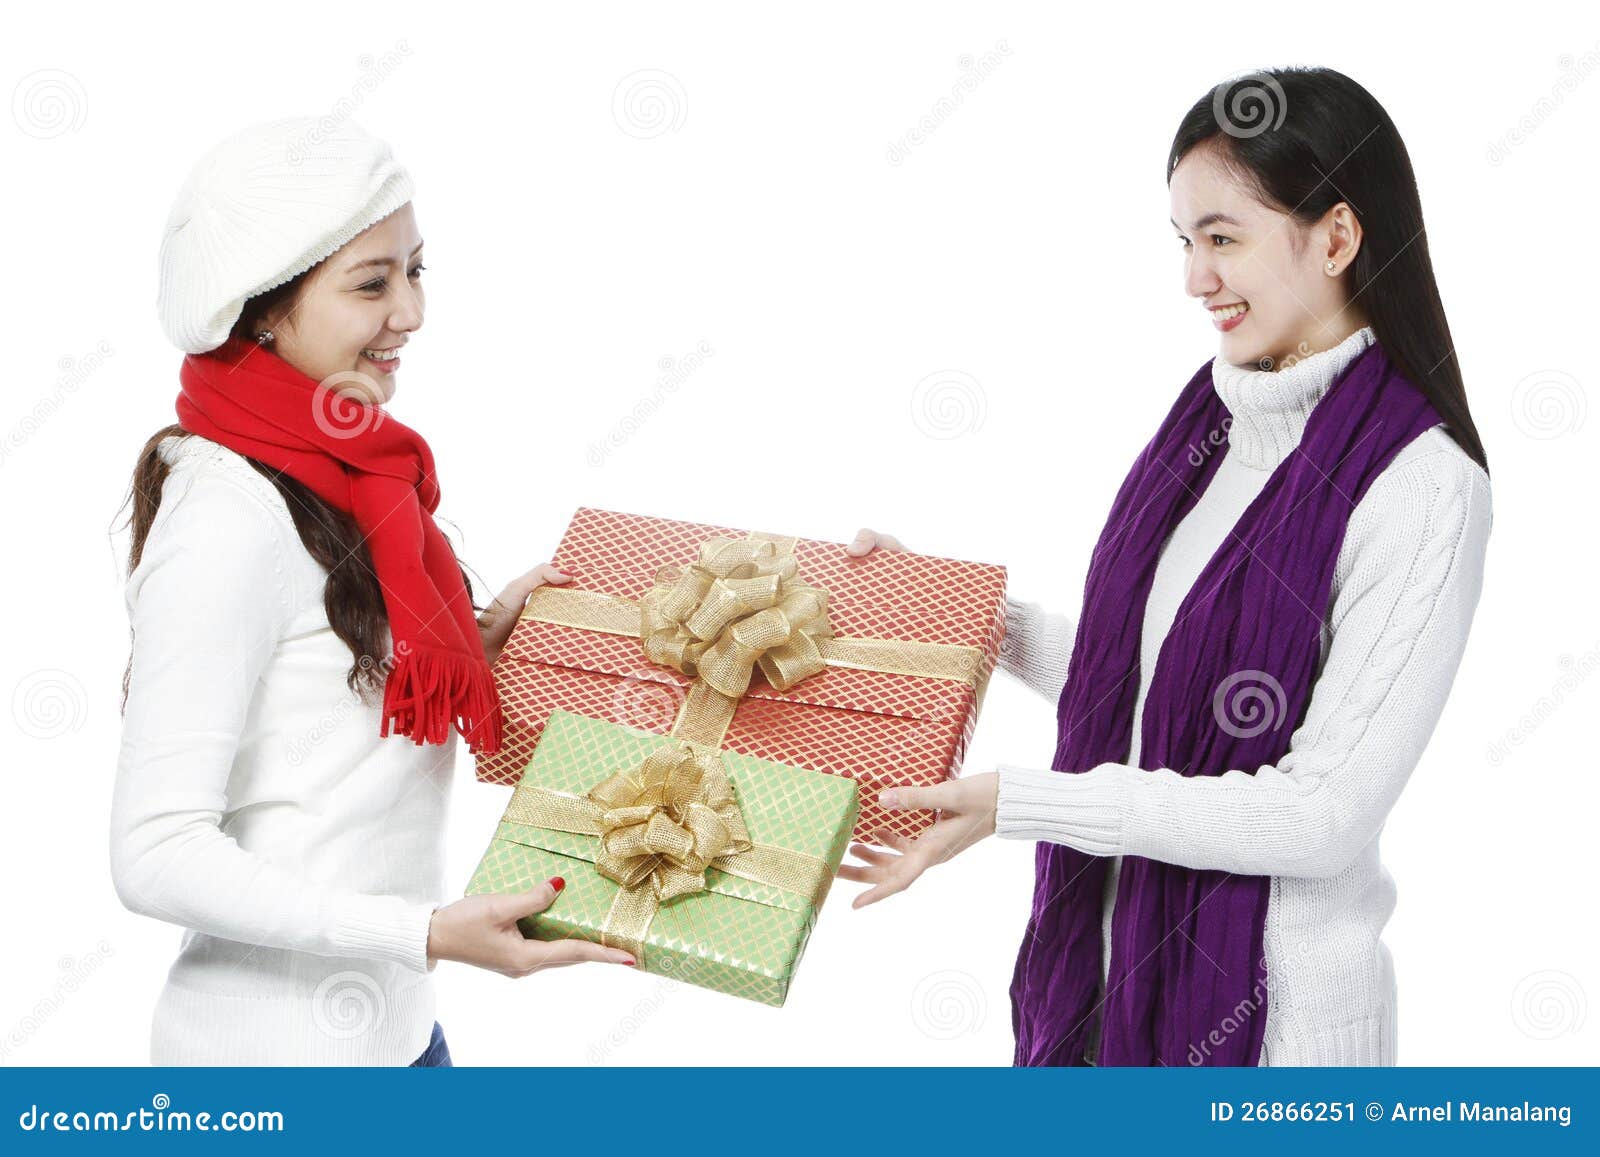 Exchange of Gifts stock image. Image of filipina, gift - 26866251